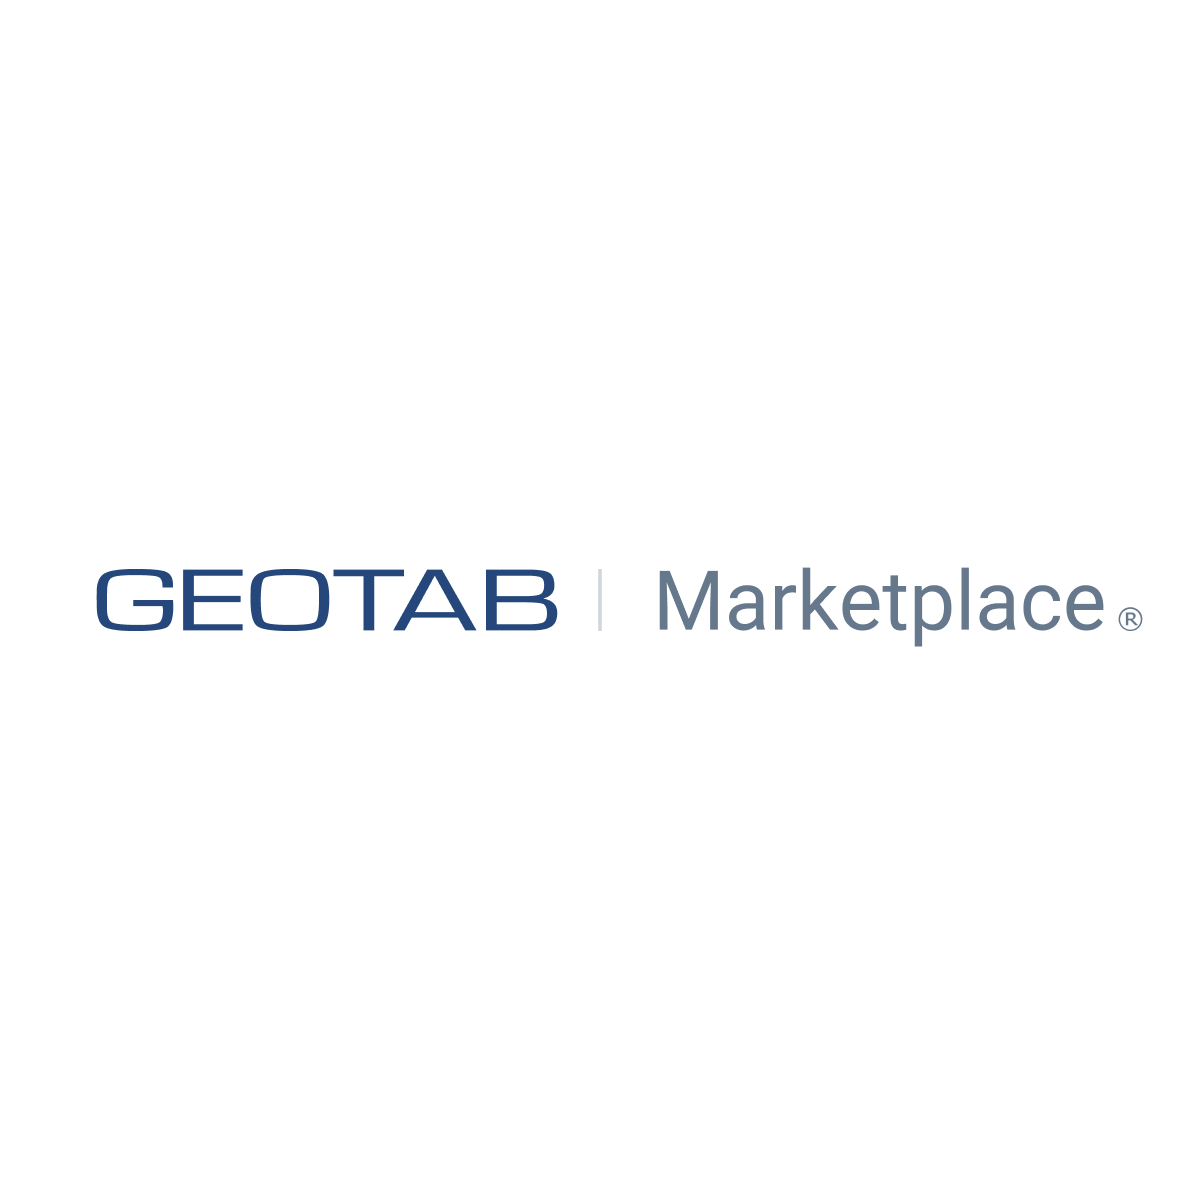 Geotab 101 – Overview Videos